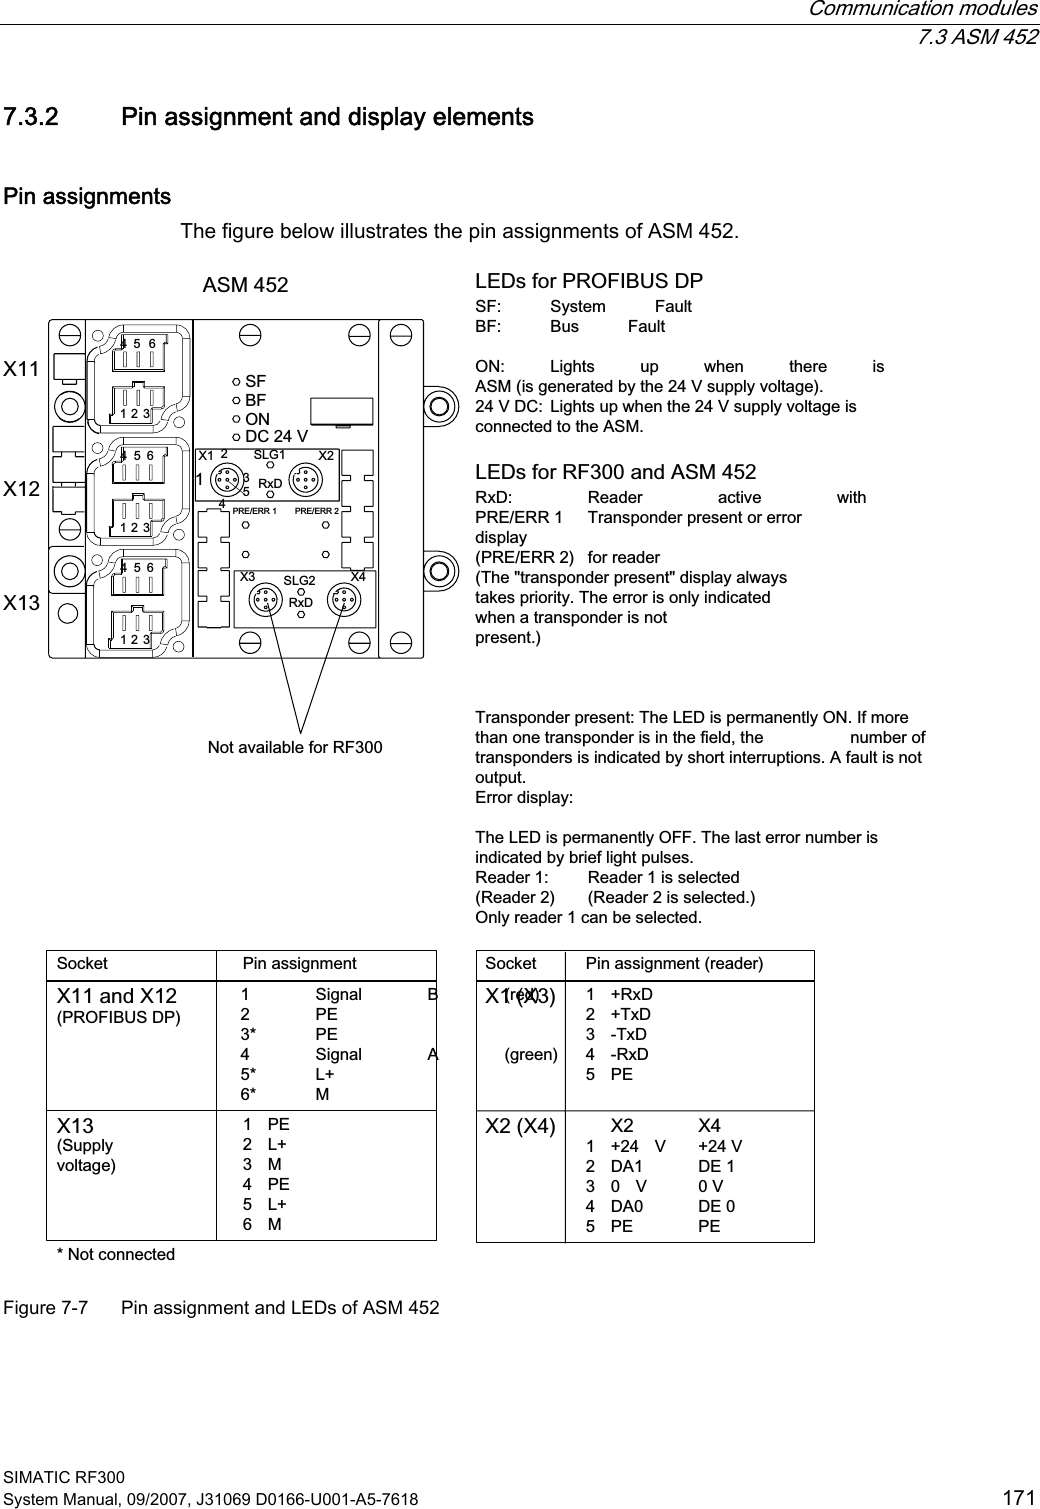  Communication modules  7.3 ASM 452 SIMATIC RF300 System Manual, 09/2007, J31069 D0166-U001-A5-7618  171 7.3.2 Pin assignment and display elements Pin assignments The figure below illustrates the pin assignments of ASM 452. 352),%86&apos;36RFNHW;DQG;3LQDVVLJQPHQW 6LJQDO % UHG 3( 3( 6LJQDO $ JUHHQ / 06XSSO\YROWDJH/(&apos;VIRU5)DQG$605[&apos; 5HDGHU DFWLYH ZLWK35((55 7UDQVSRQGHUSUHVHQWRUHUURU GLVSOD\35((55 IRUUHDGHU7KHWUDQVSRQGHUSUHVHQWGLVSOD\DOZD\VWDNHVSULRULW\7KHHUURULVRQO\LQGLFDWHGZKHQDWUDQVSRQGHULVQRWSUHVHQW7UDQVSRQGHUSUHVHQW7KH/(&apos;LVSHUPDQHQWO\21,IPRUHWKDQRQHWUDQVSRQGHULVLQWKHILHOGWKH  QXPEHURIWUDQVSRQGHUVLVLQGLFDWHGE\VKRUWLQWHUUXSWLRQV$IDXOWLVQRWRXWSXW(UURUGLVSOD\7KH/(&apos;LVSHUPDQHQWO\2))7KHODVWHUURUQXPEHULVLQGLFDWHGE\EULHIOLJKWSXOVHV5HDGHU 5HDGHULVVHOHFWHG5HDGHU 5HDGHULVVHOHFWHG2QO\UHDGHUFDQEHVHOHFWHG/(&apos;VIRU352),%86&apos;36) 6\VWHP )DXOW%) %XV )DXOW21 /LJKWV XS ZKHQ WKHUH LV$60LVJHQHUDWHGE\WKH9VXSSO\YROWDJH9&apos;&amp; /LJKWVXSZKHQWKH9VXSSO\YROWDJHLVFRQQHFWHGWRWKH$601RWFRQQHFWHG3LQDVVLJQPHQWUHDGHU6RFNHW1RWDYDLODEOHIRU5);;;;$60; ;; ;;;;&apos;&amp;95[&apos;35((556/*5[&apos;6/*35((556)%)21 3( / 0 3( / 0; 5[&apos; 7[&apos; 7[&apos; 5[&apos; 3(; ;  9 9 &apos;$ &apos;(  9 9 &apos;$ &apos;( 3( 3( Figure 7-7  Pin assignment and LEDs of ASM 452 